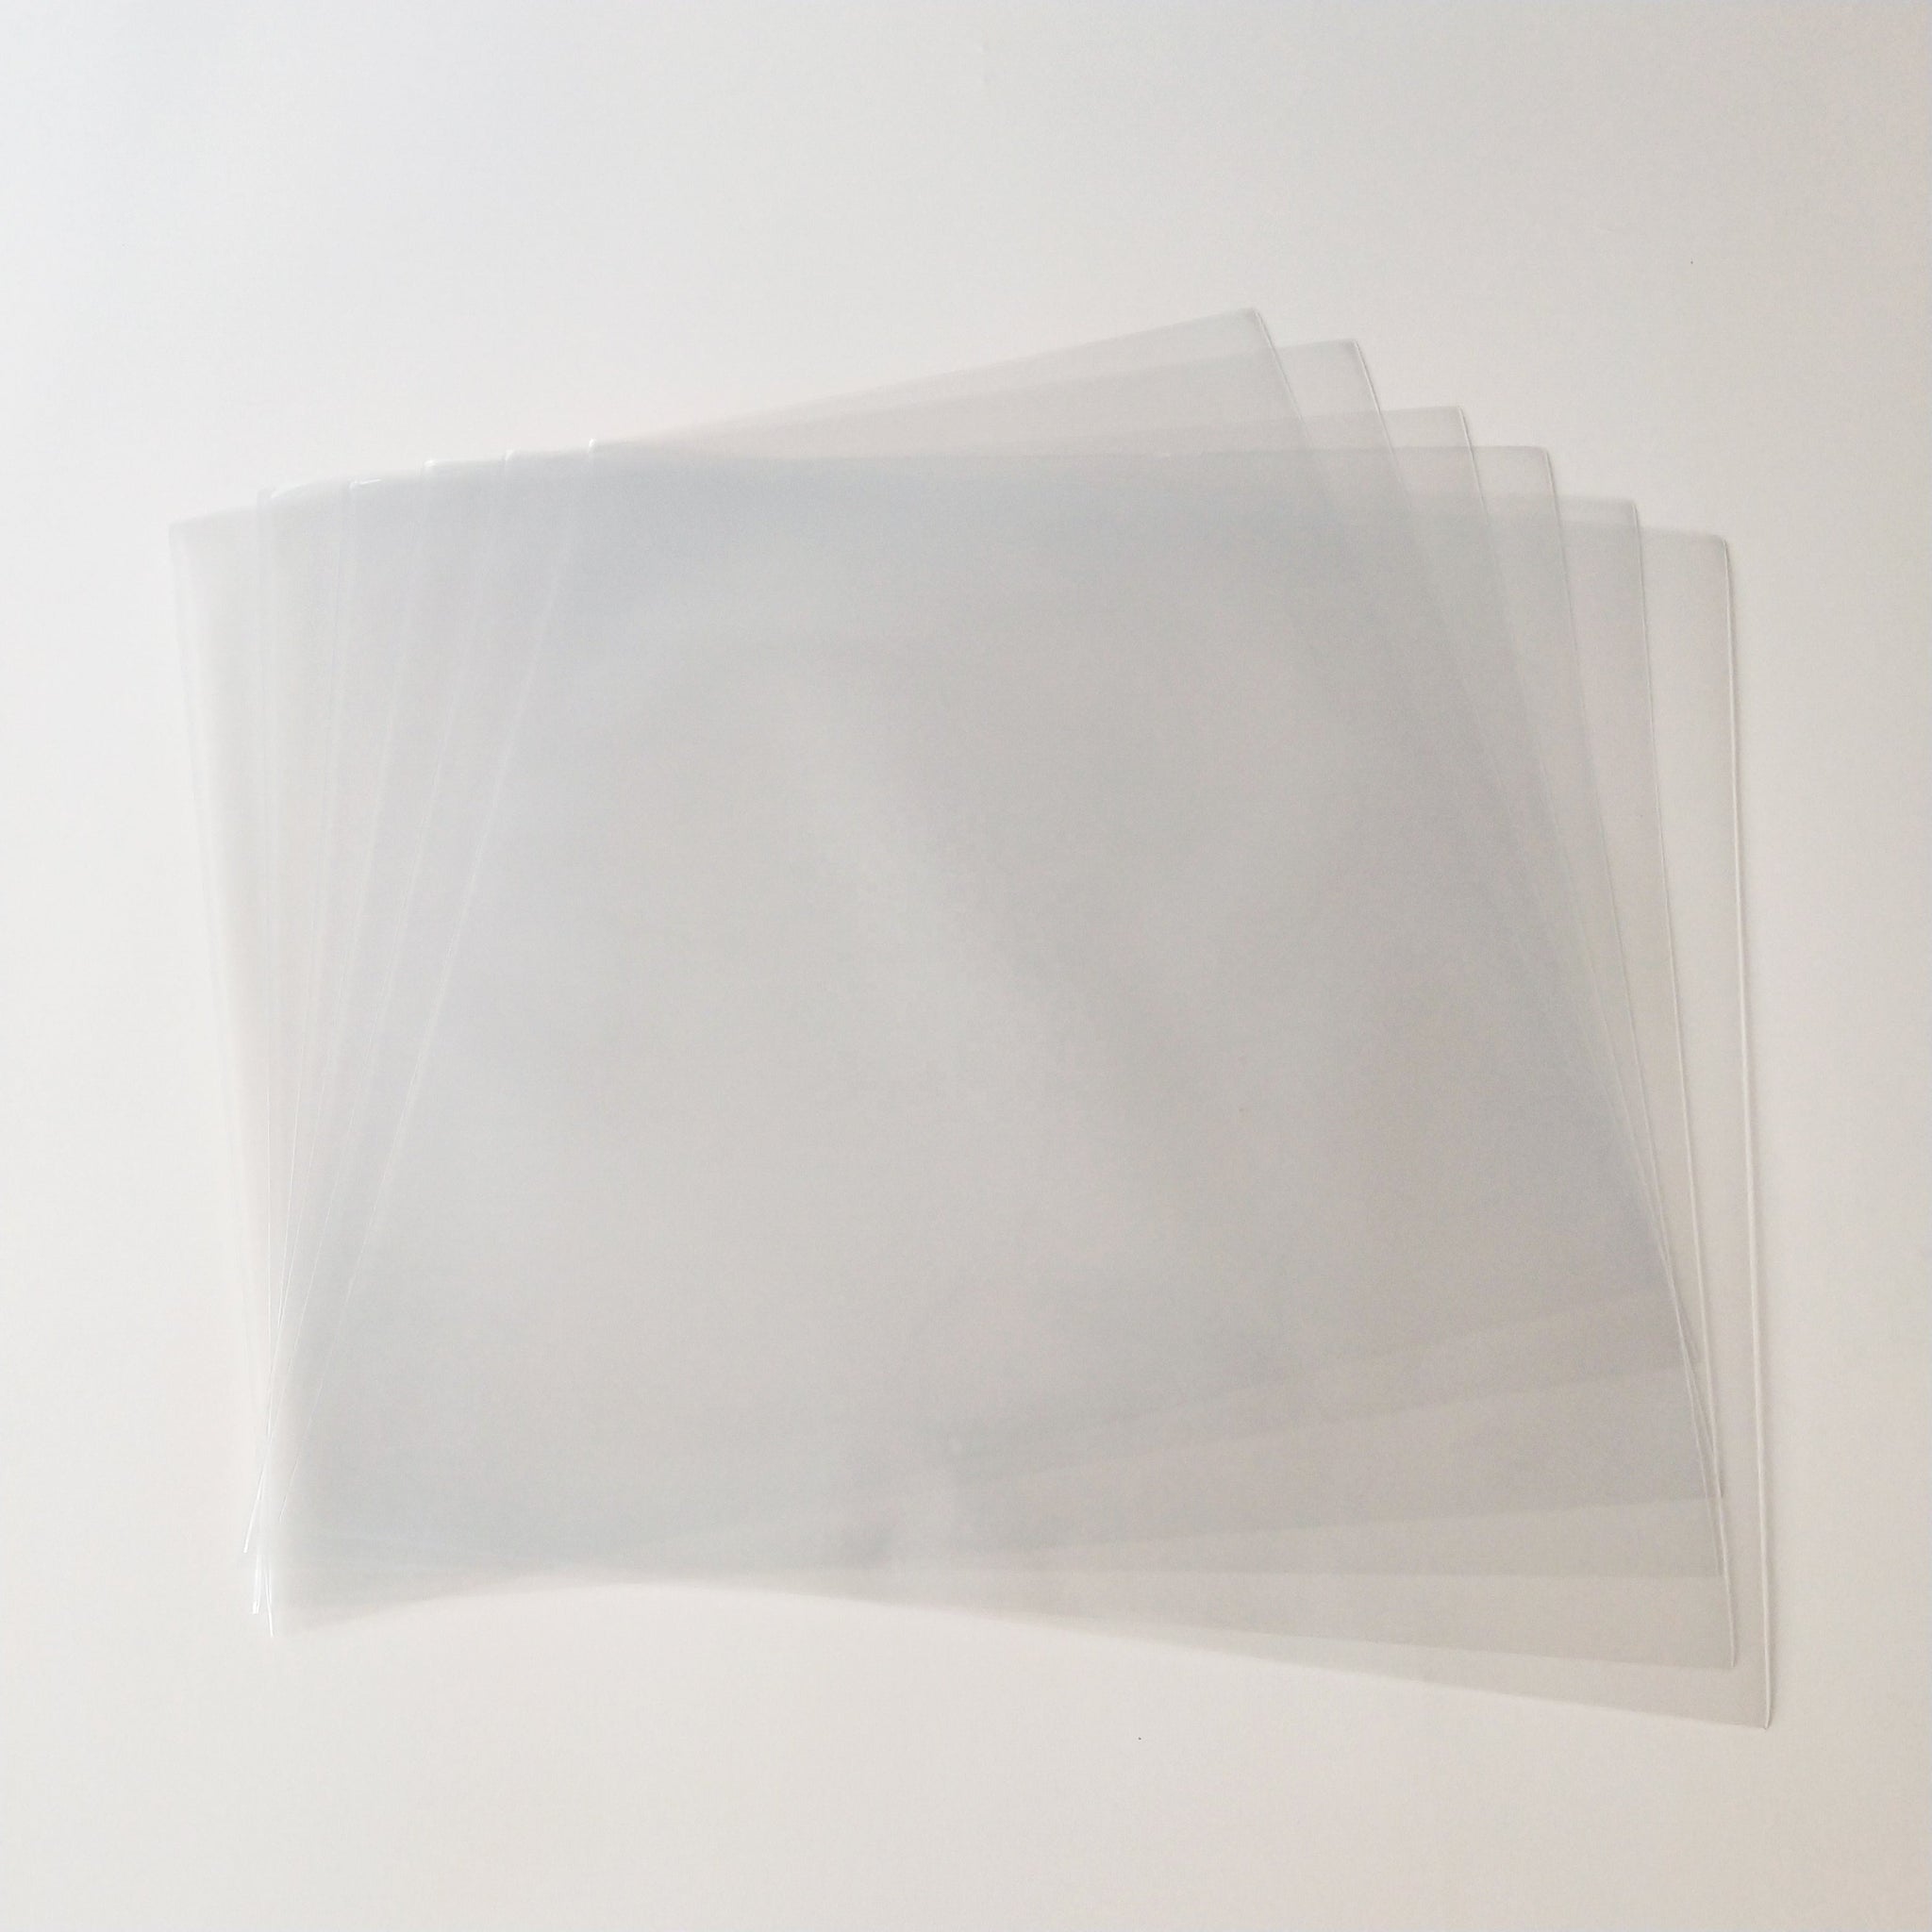 UV-Resistant 4 mil (.004) Soft Outer Sleeves (50 pack) – Vinyl